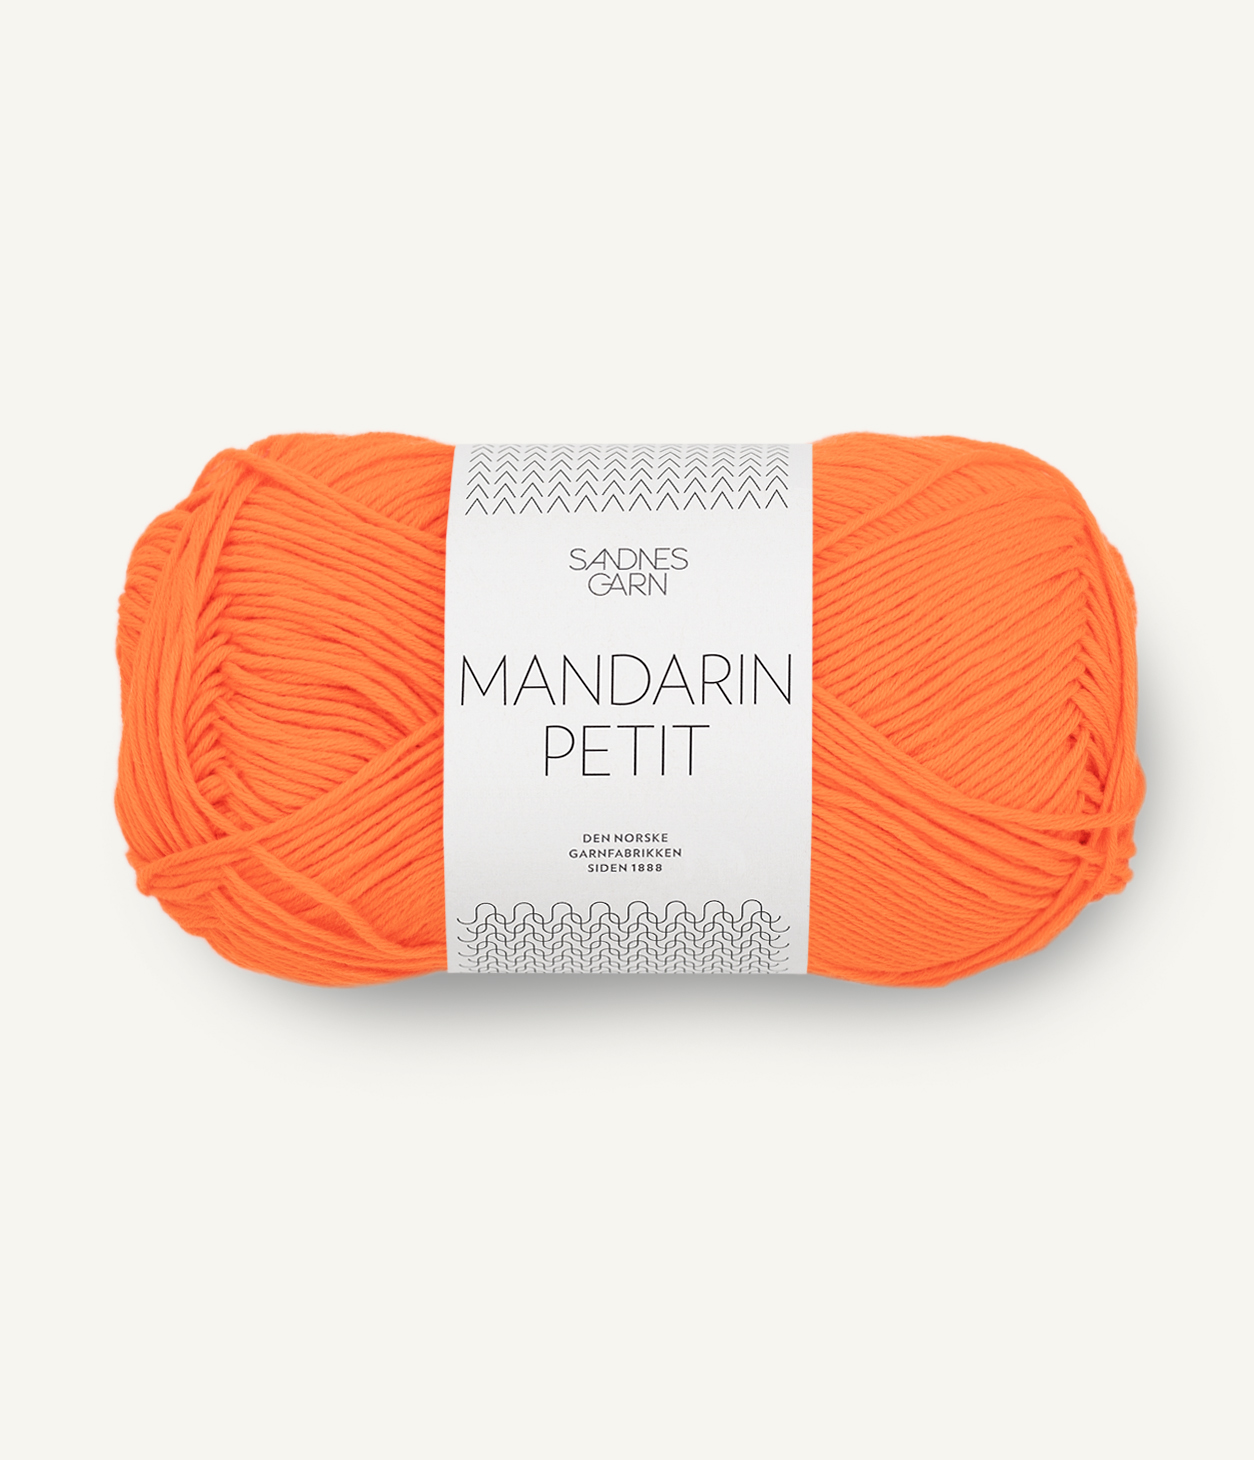 MANDARIN PETIT 3009 Oransje tiger